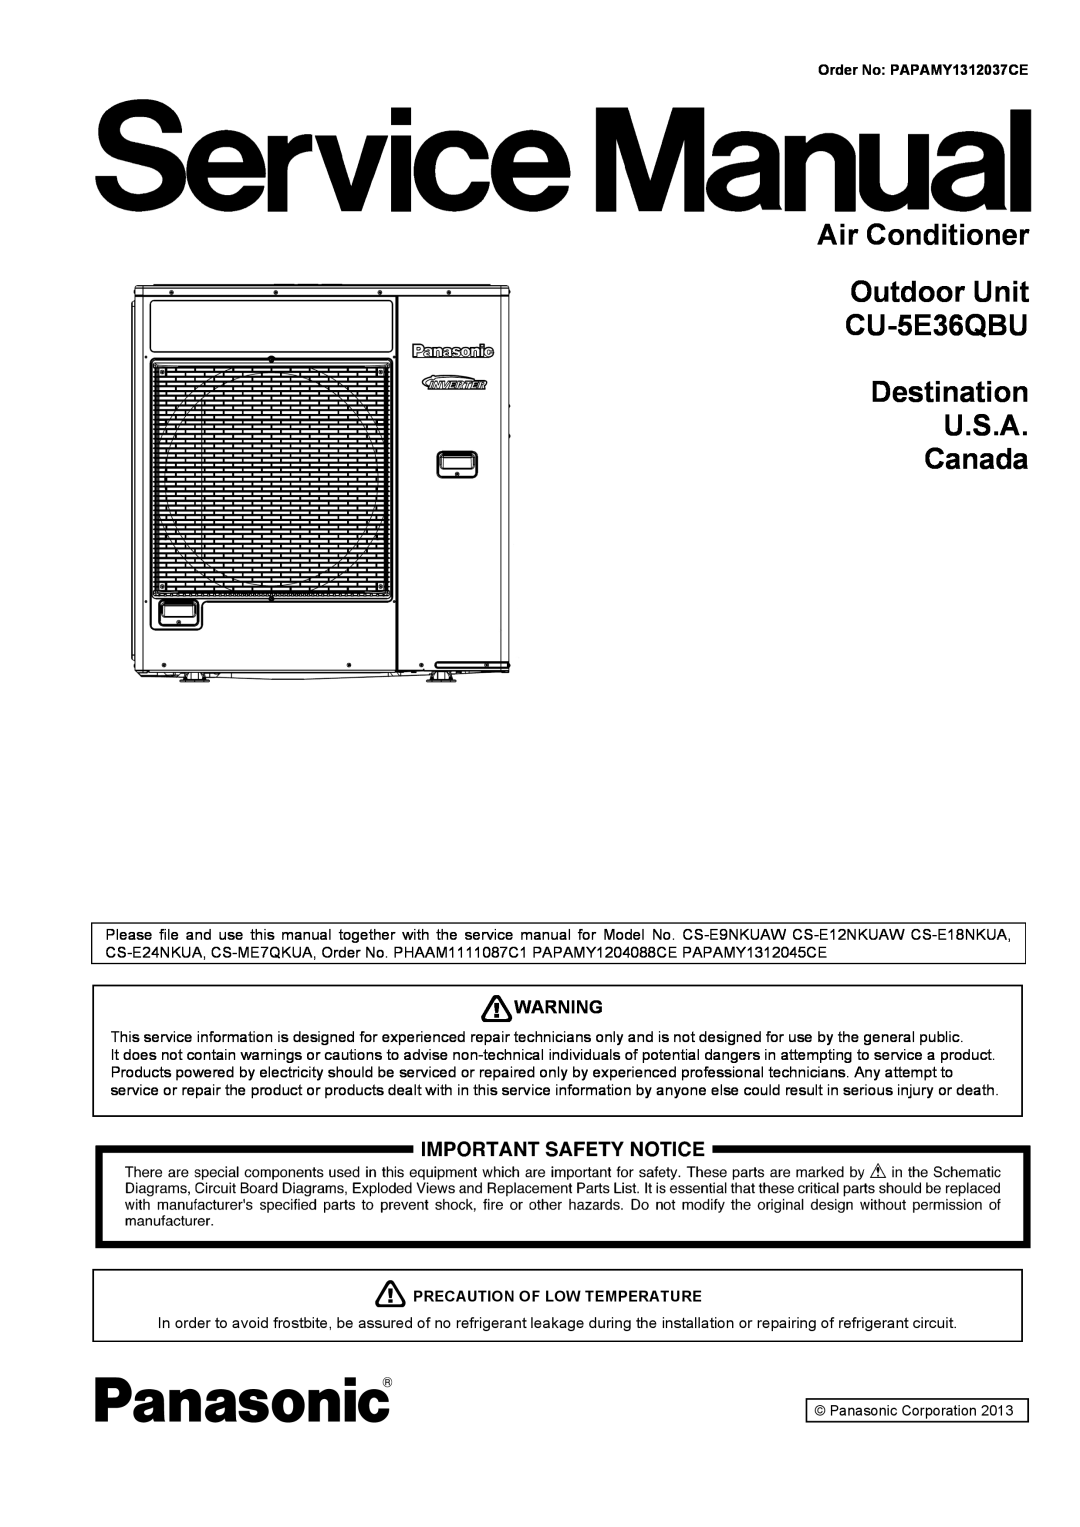 Panasonic service manual Air Conditioner Outdoor Unit CU-5E36QBU, Destination U.S.A Canada, Order No: PAPAMY1312037CE 